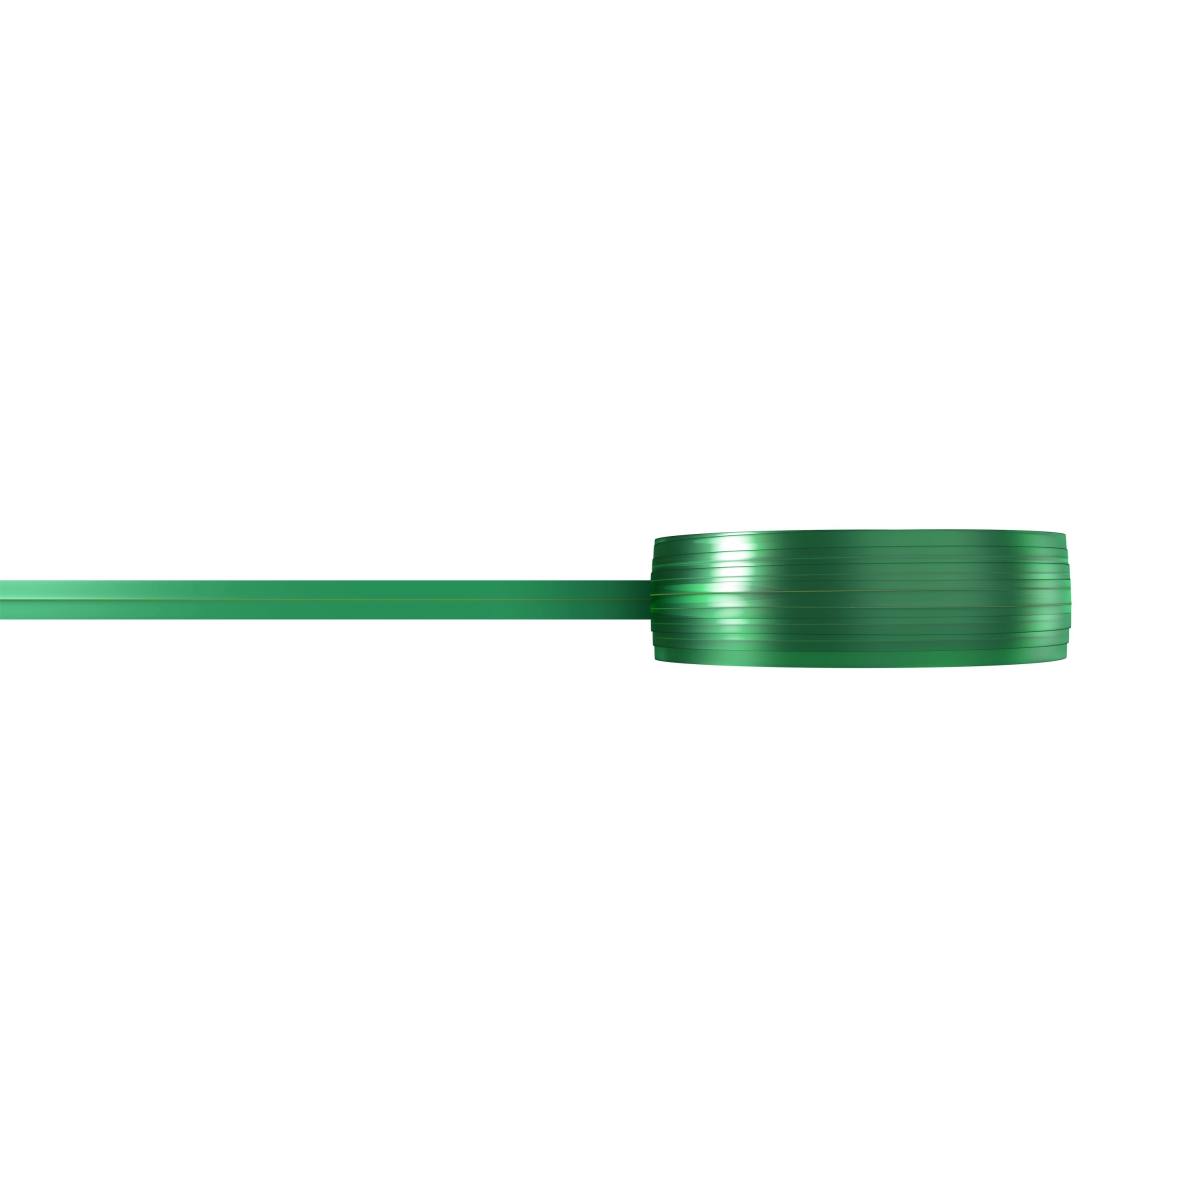  3M Tri Line veitsetön nauha vihreä 6mm x 50m